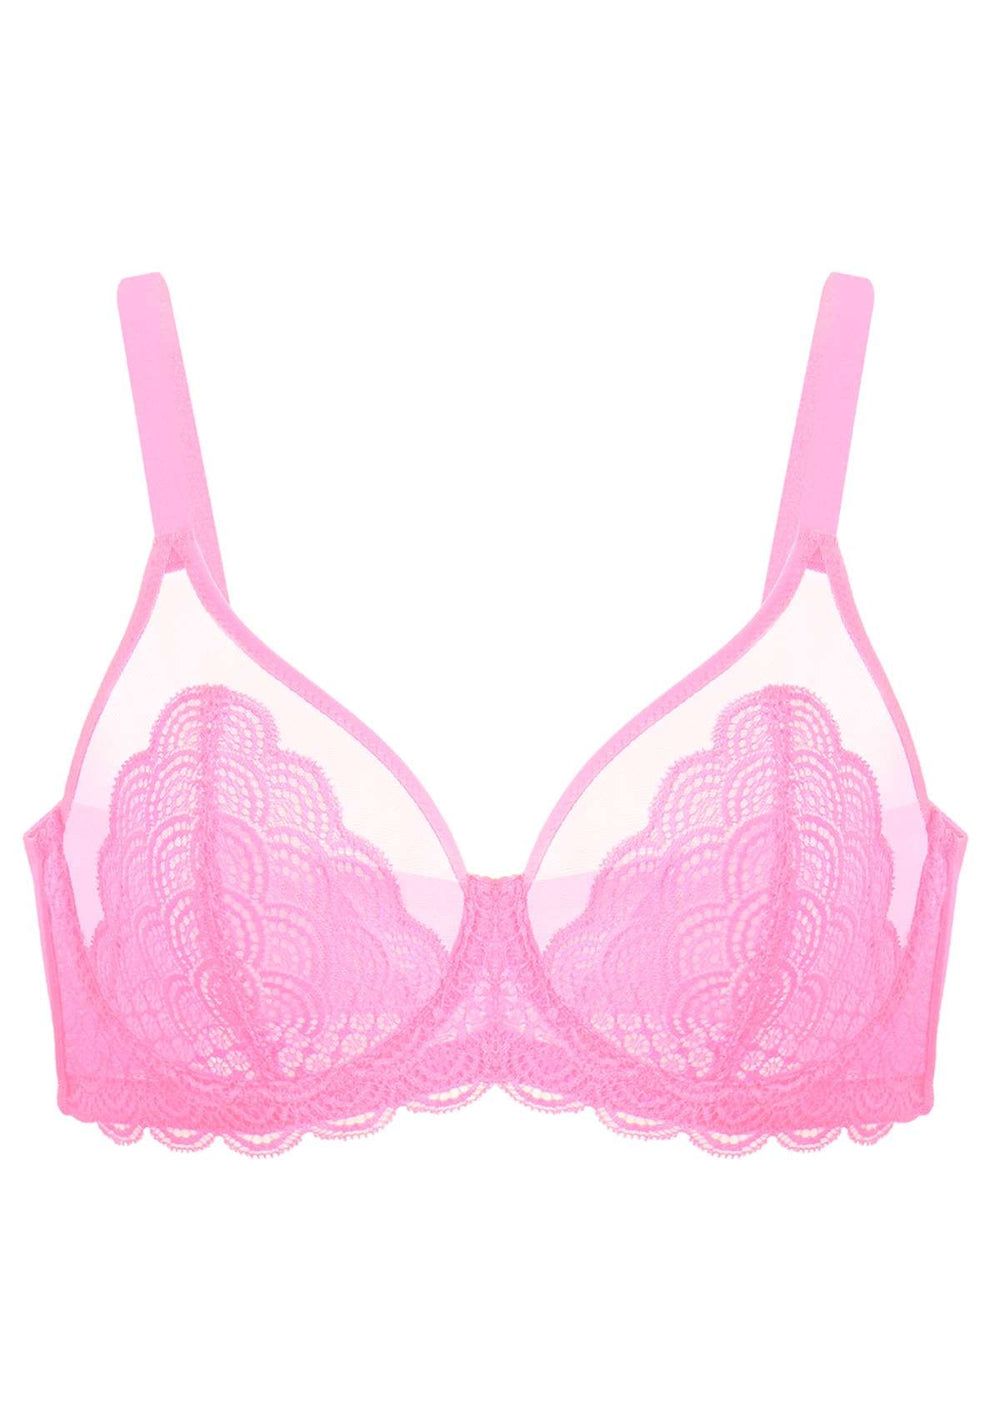 Hestia Women's Lace Wirefree Bra - Light Pink - Size 14B, BIG W